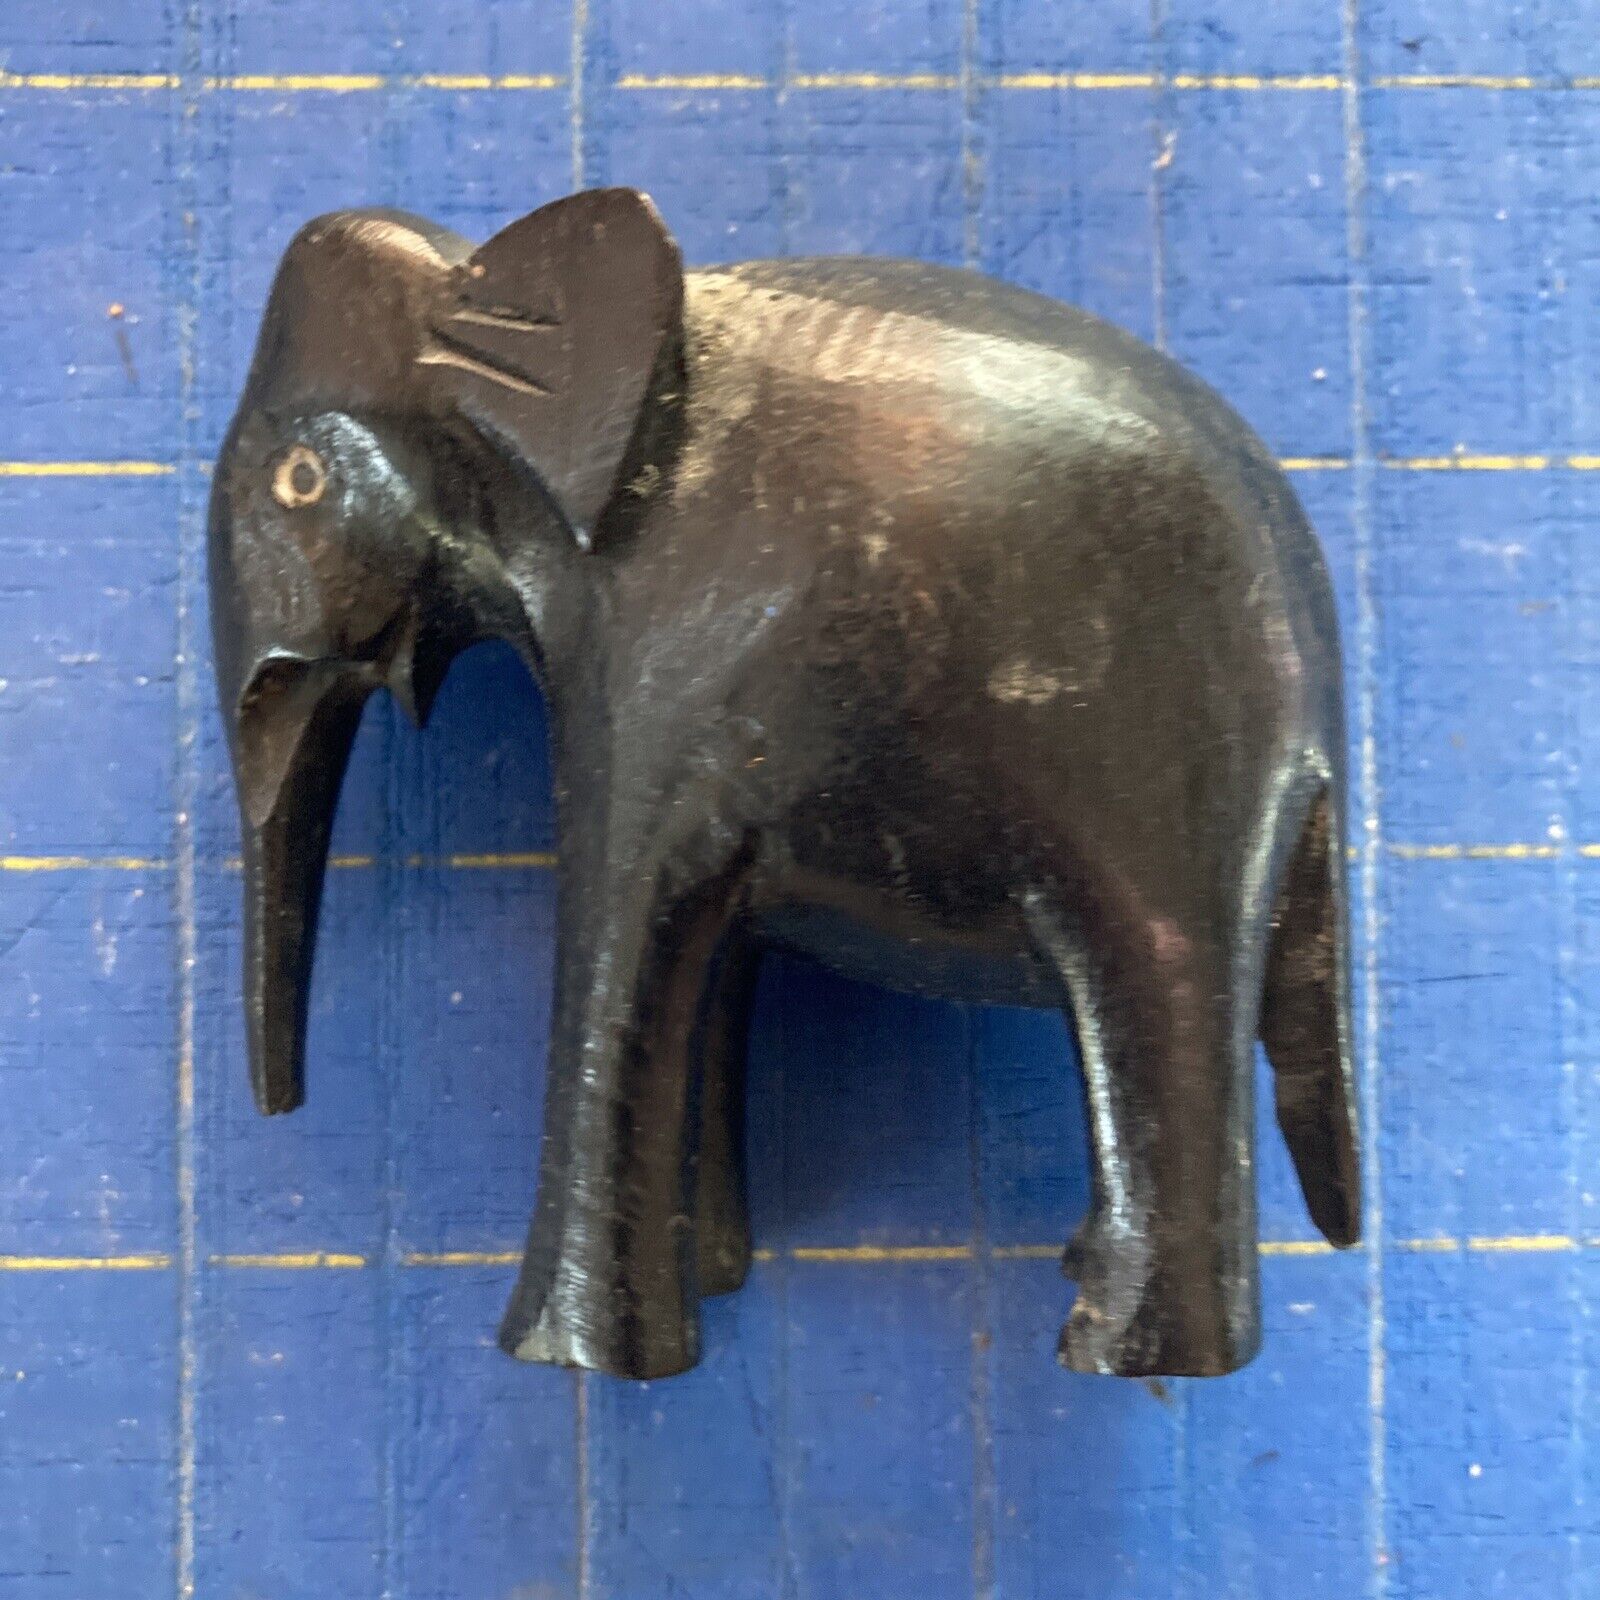 Black ebony wood vintage Art Deco antique small elephant ornament figurine B6